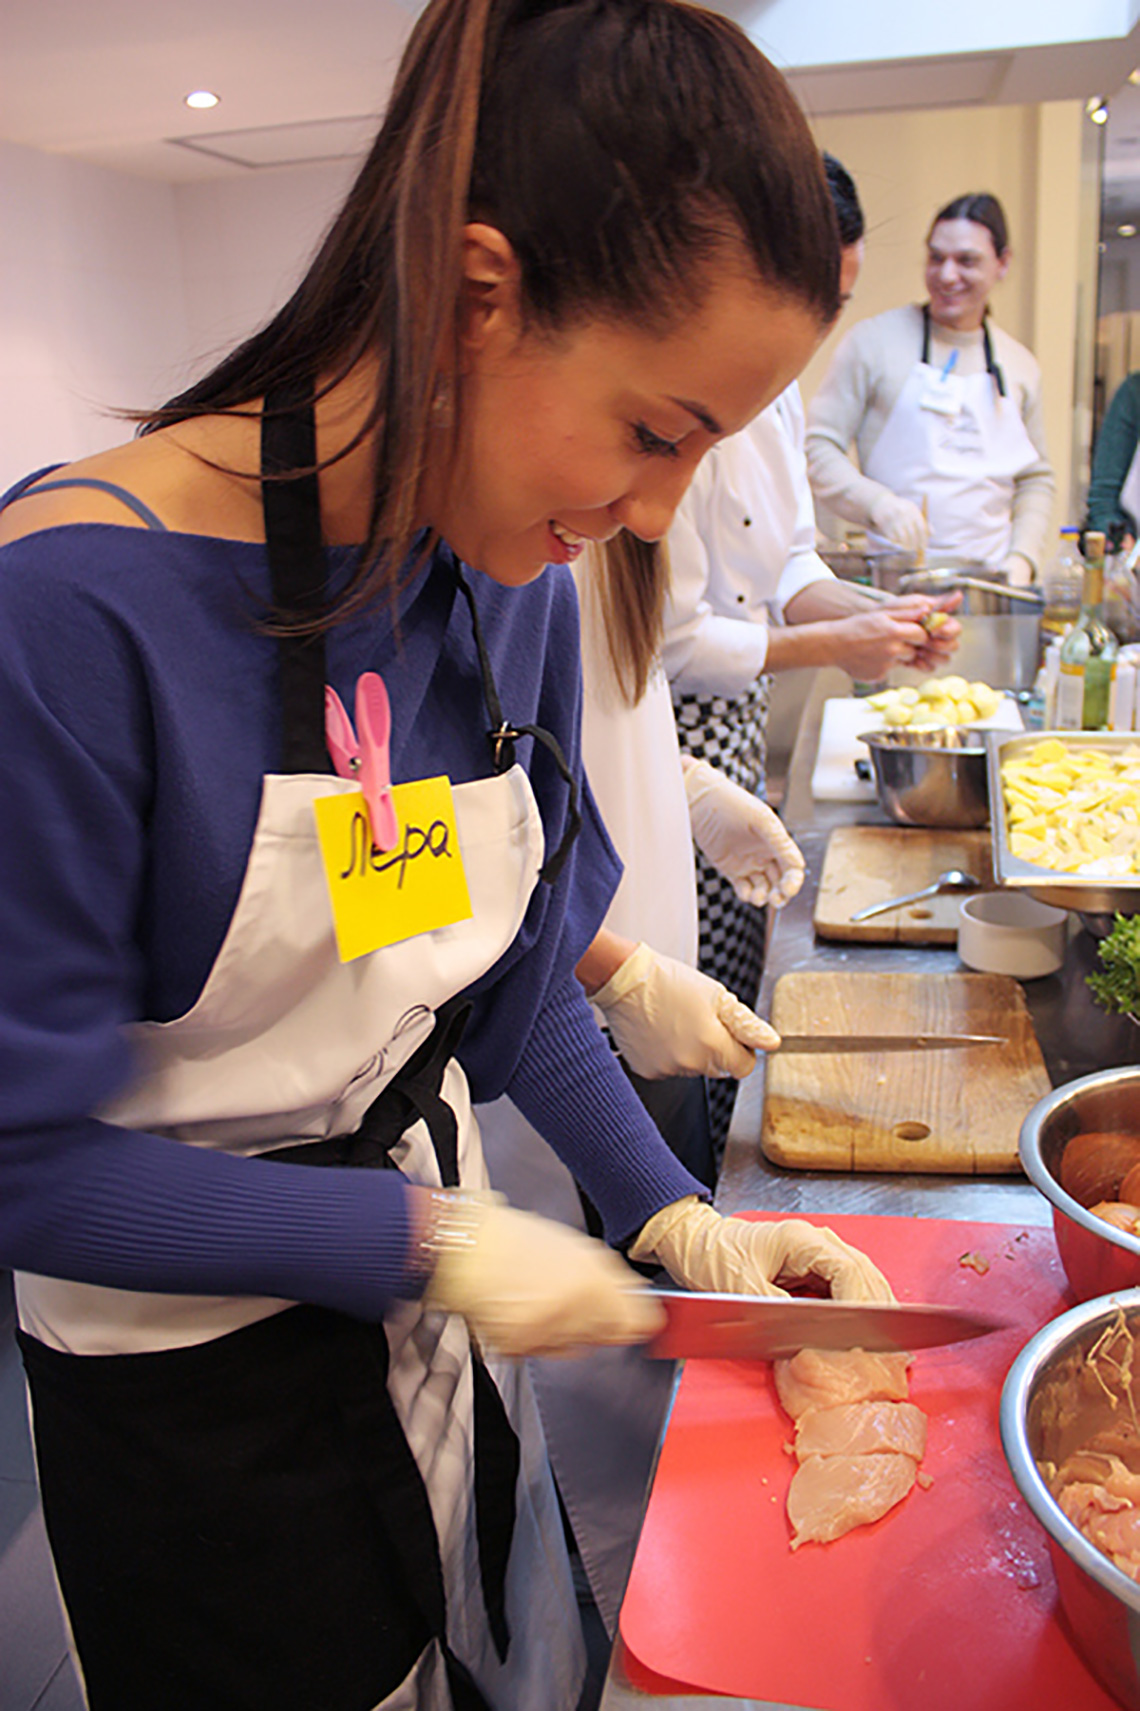 Participants of lesson "Dutch Cuisine". Cooking school in Ukraine.